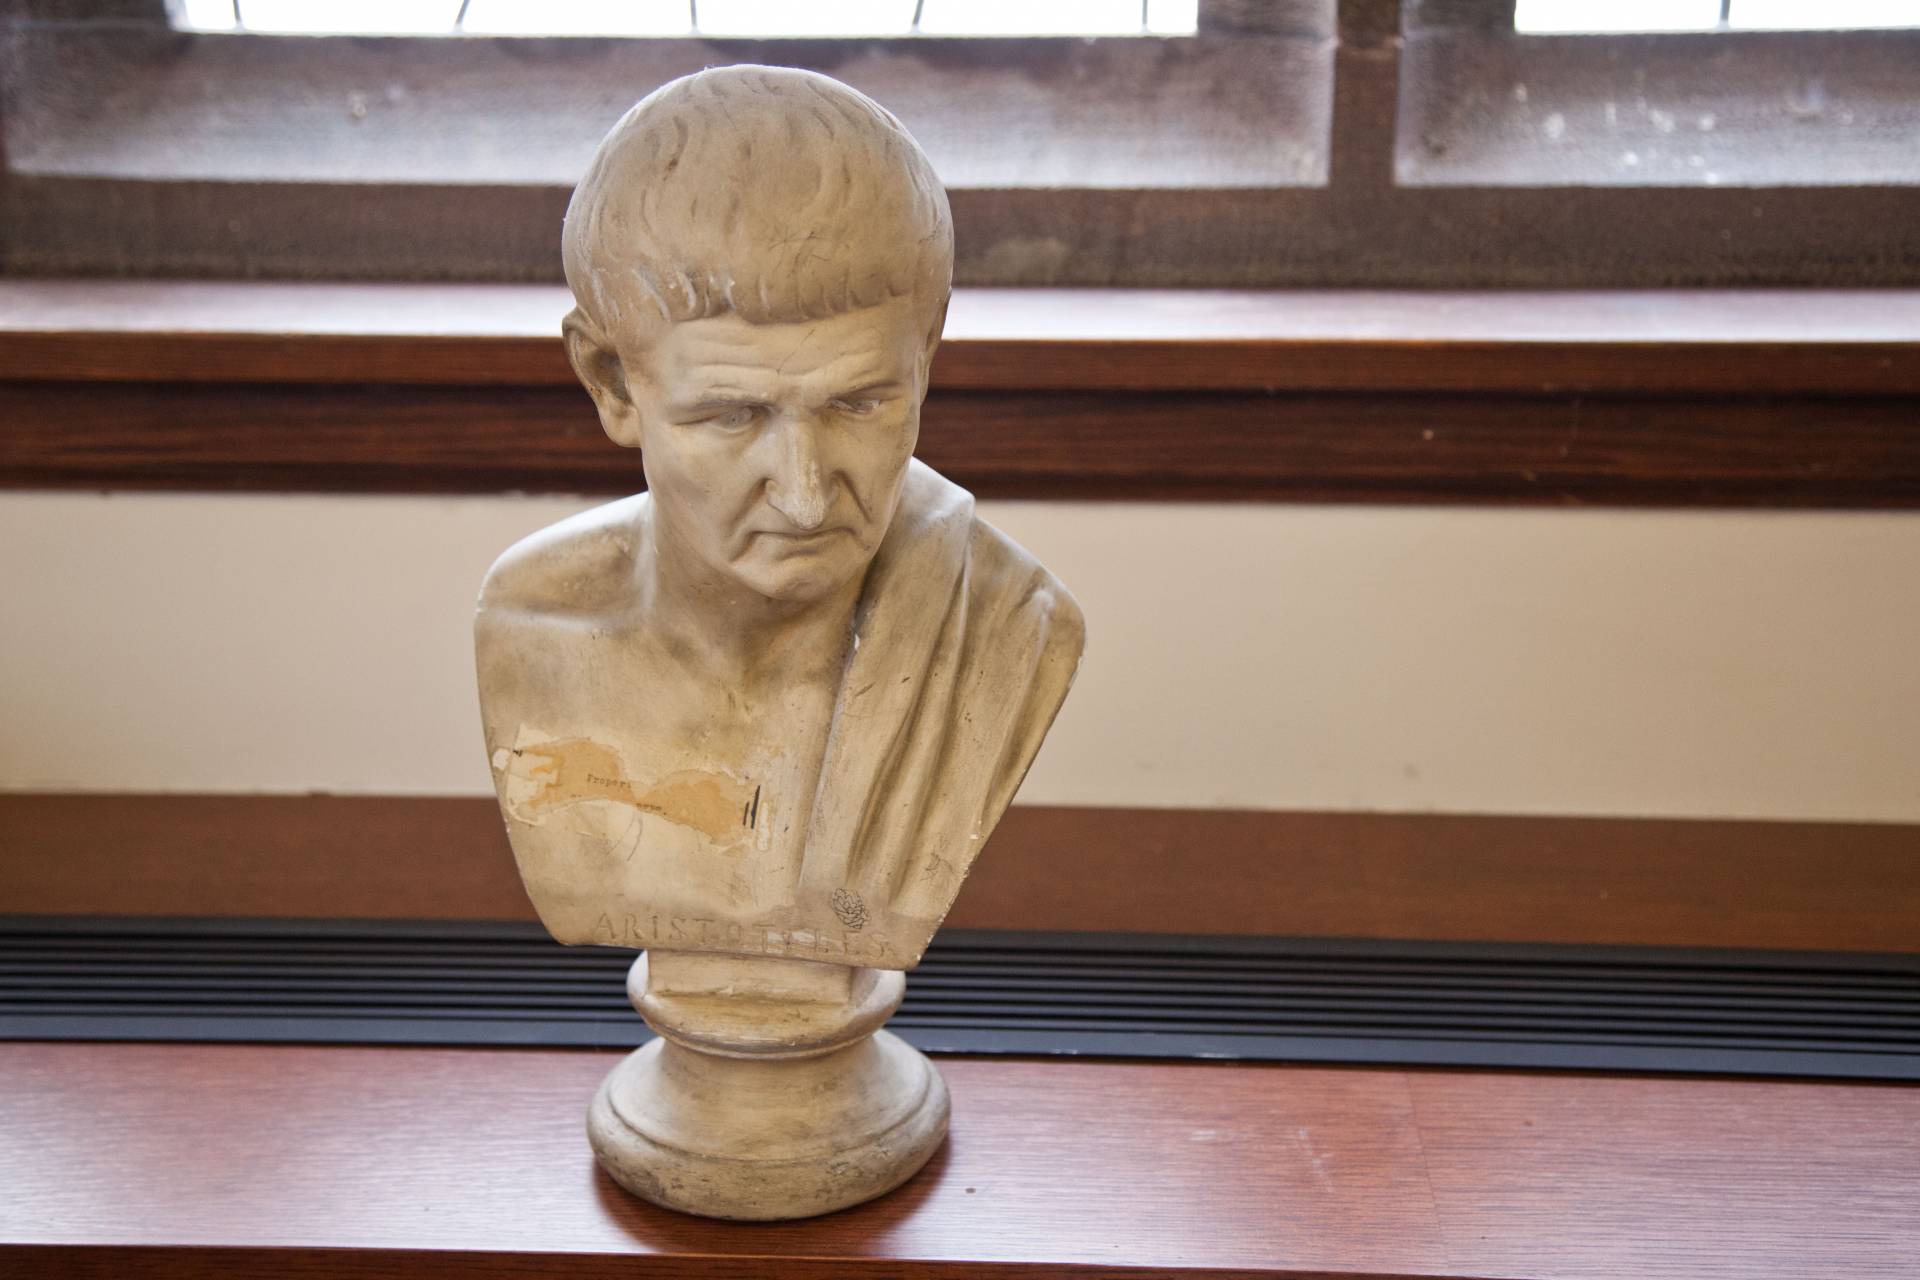 A photo of a classical sculpture, a bust of a man.